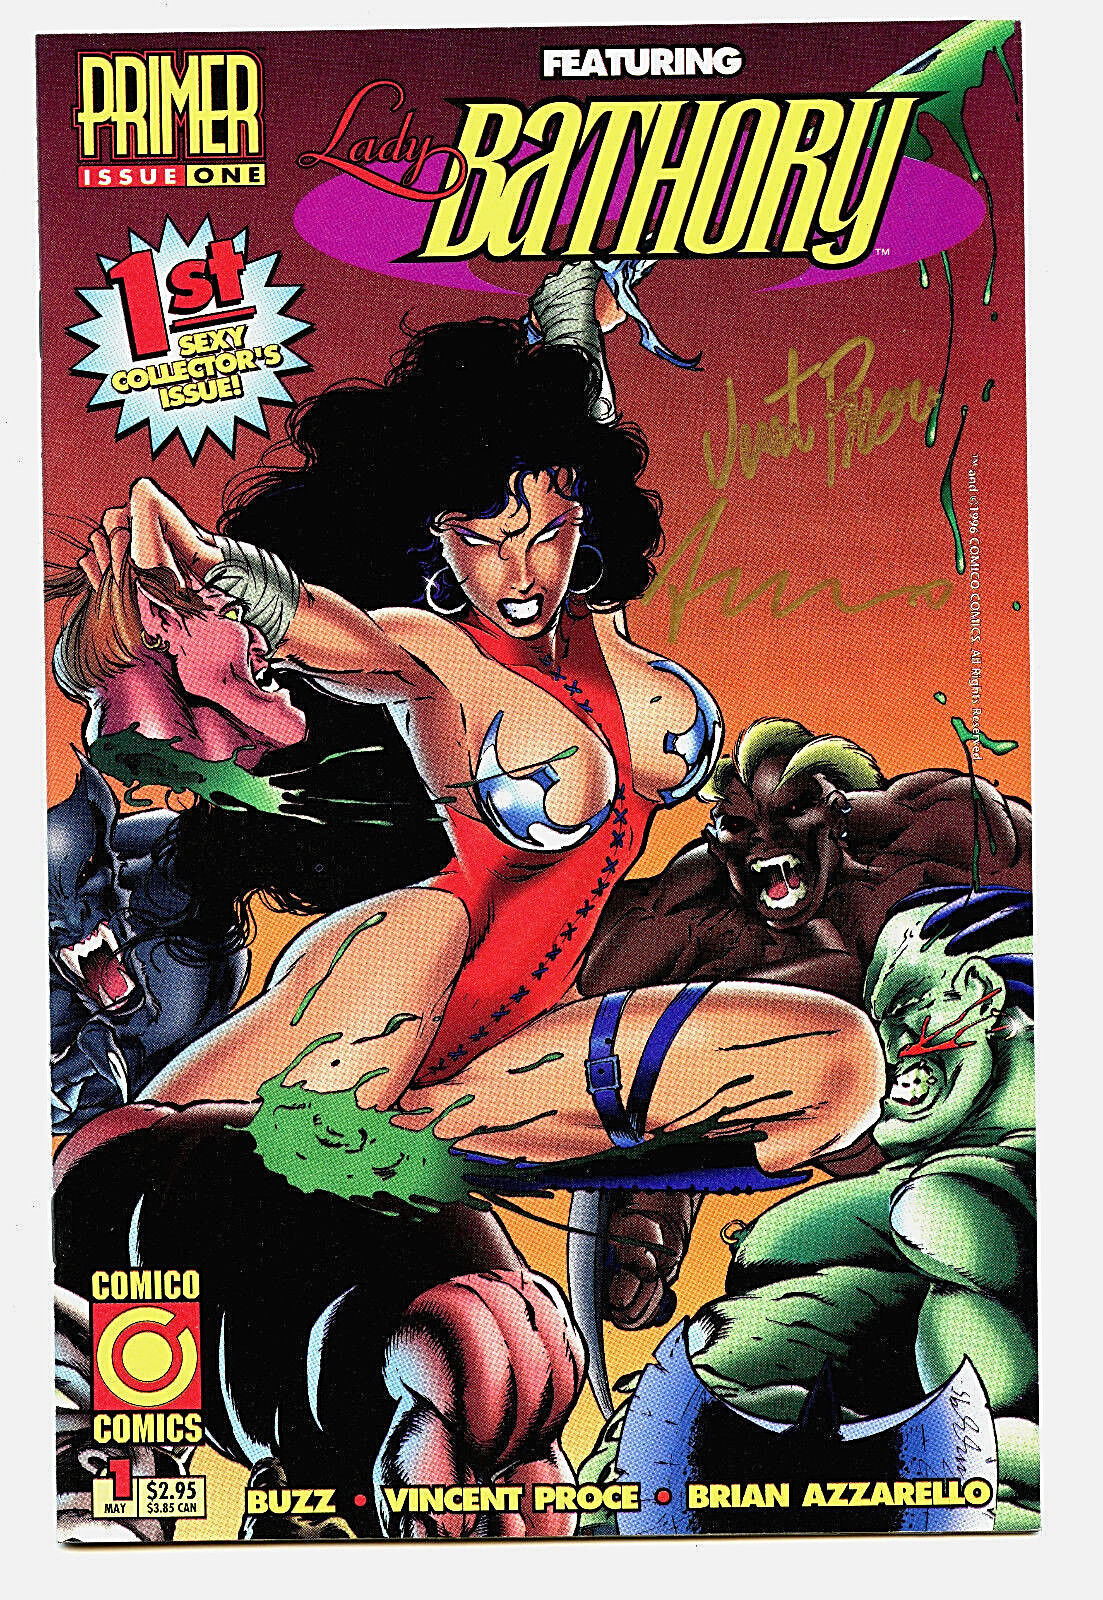 Lady Bathory Primer Issue #1 Signed ( 2 Signatures)  Comico Comics 1996 H7